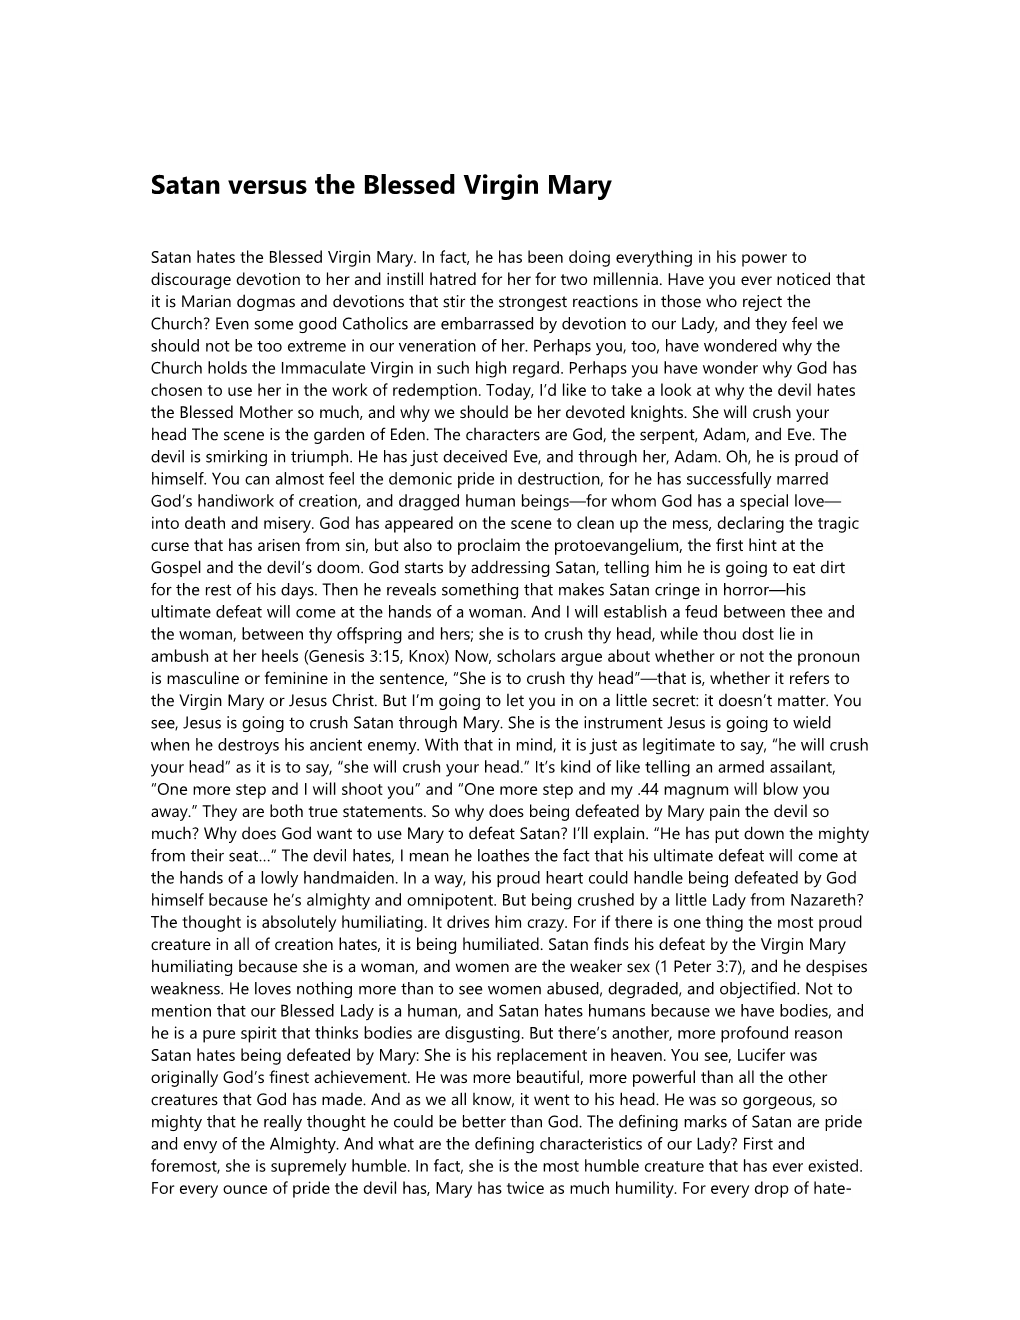 Satan Versus the Blessed Virgin Mary